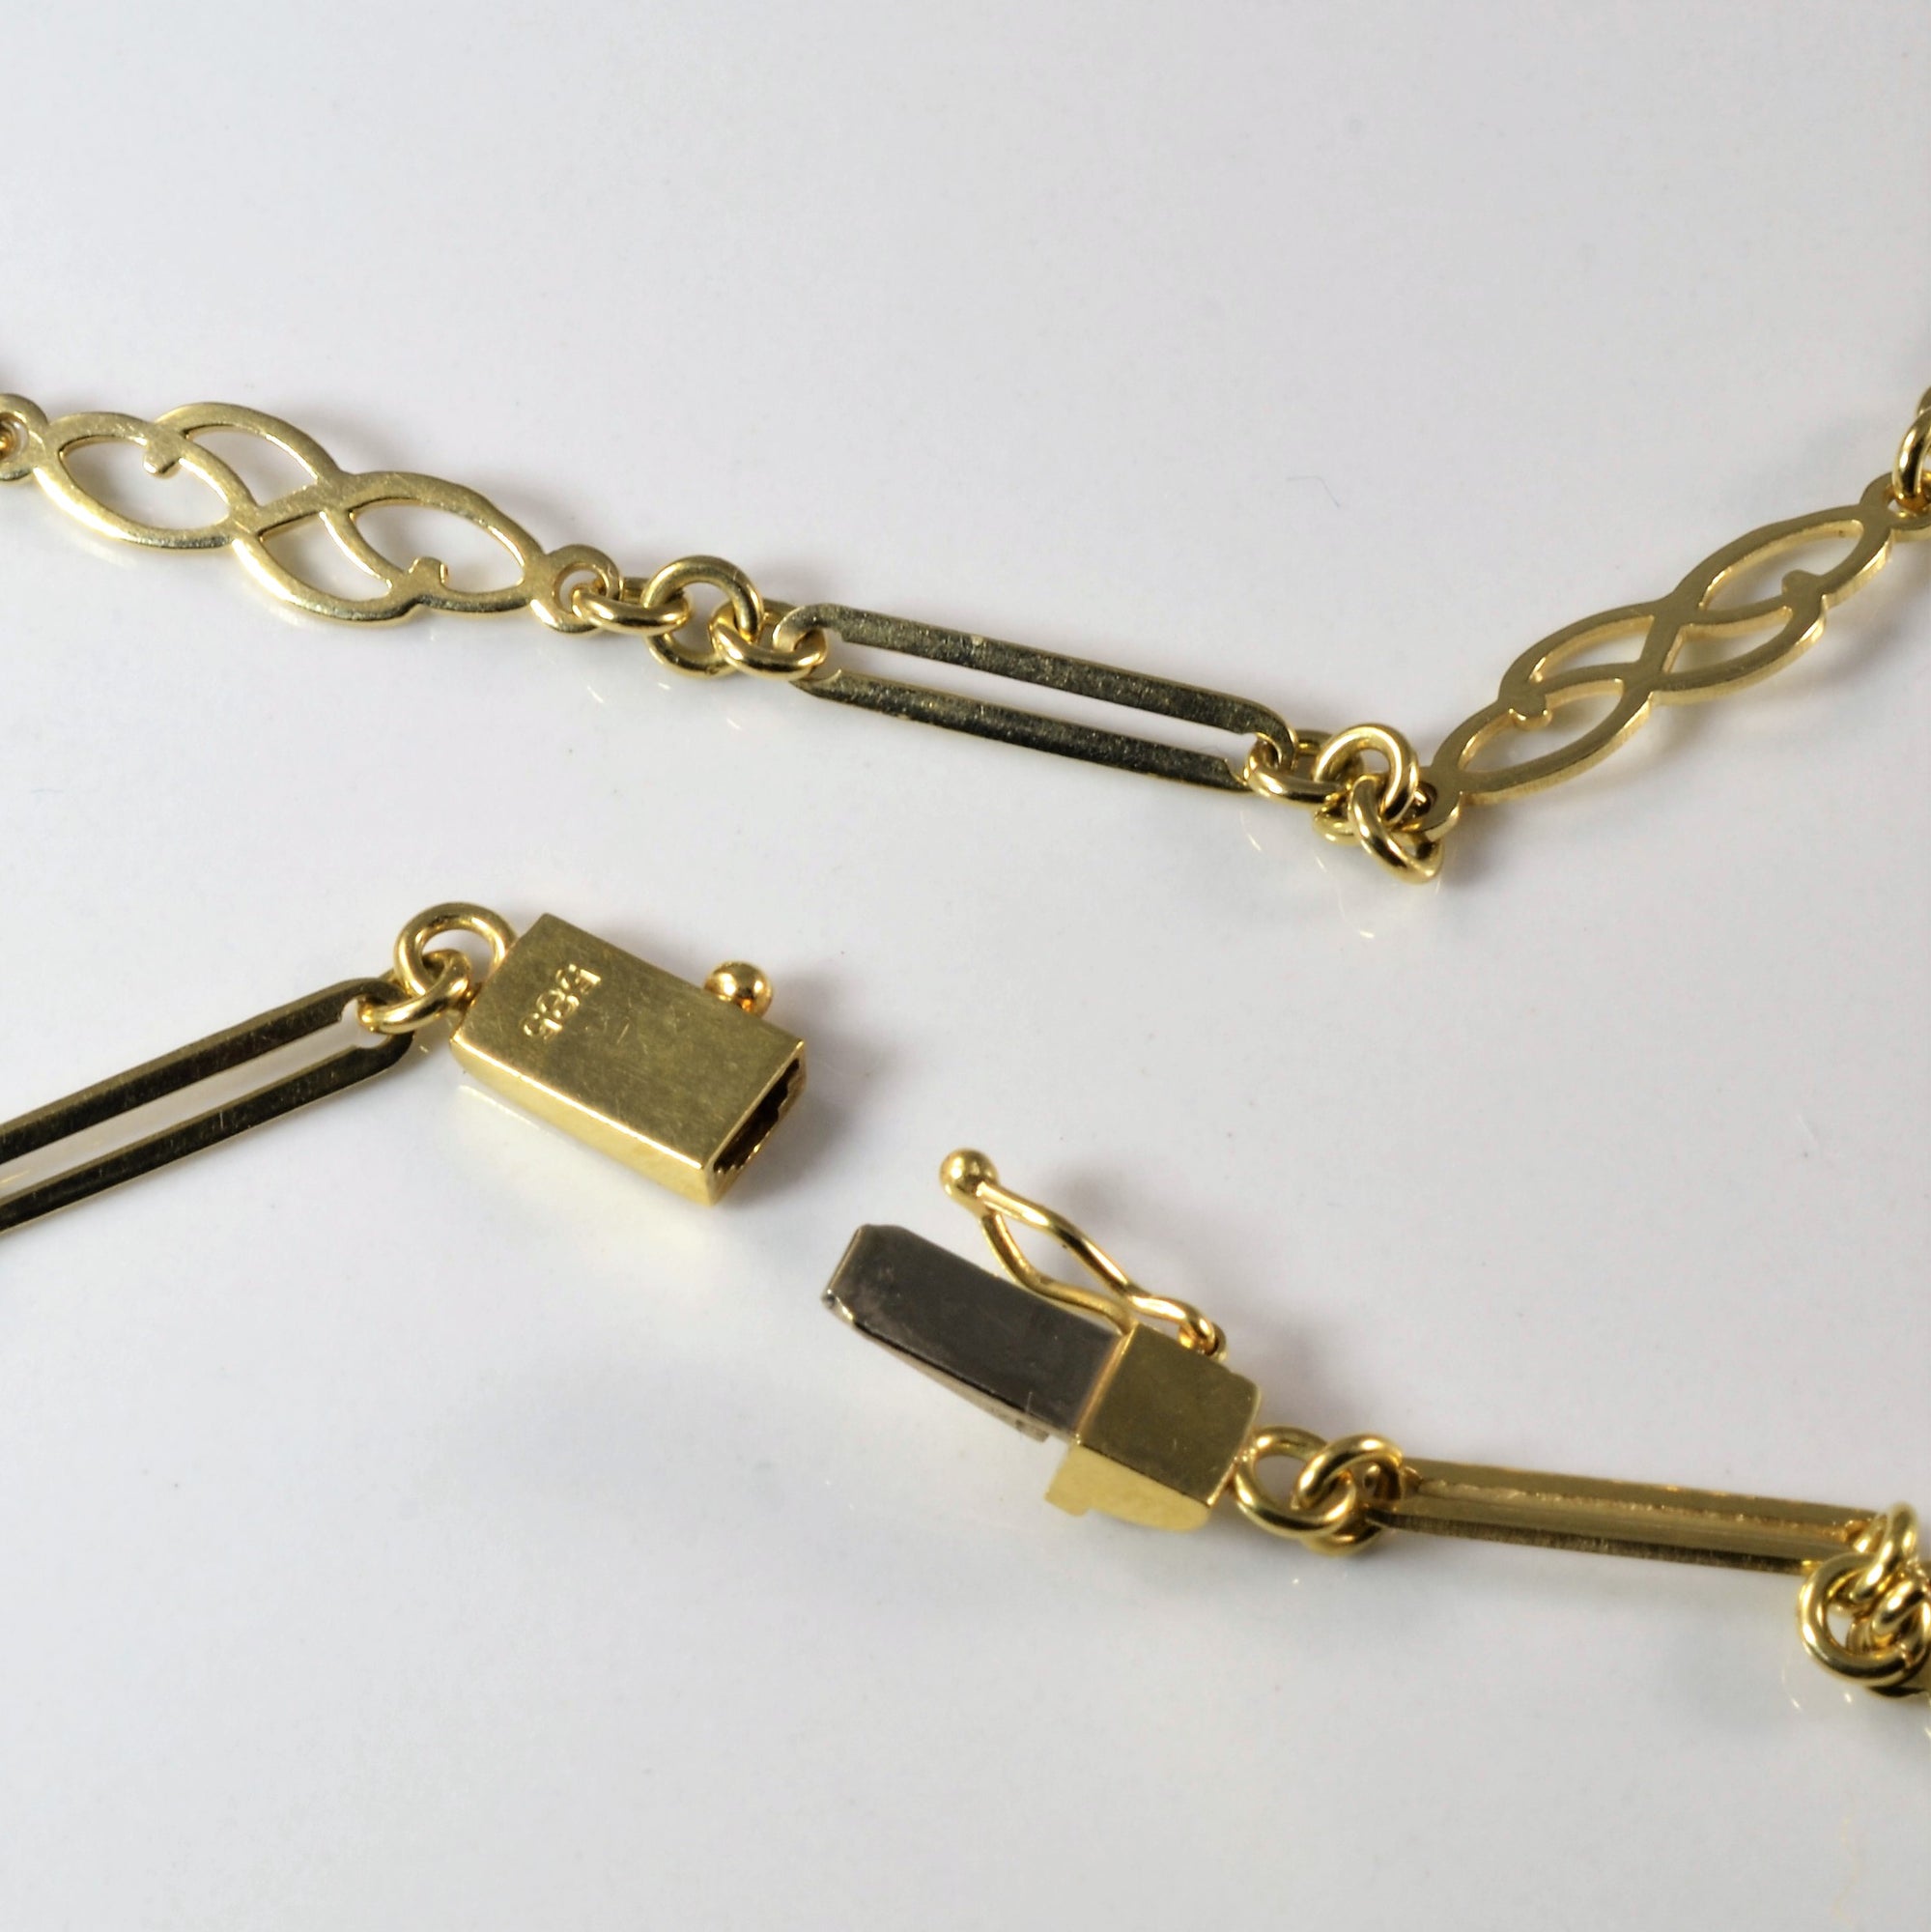 14k Yellow Gold Long Fancy Link Chain | 34